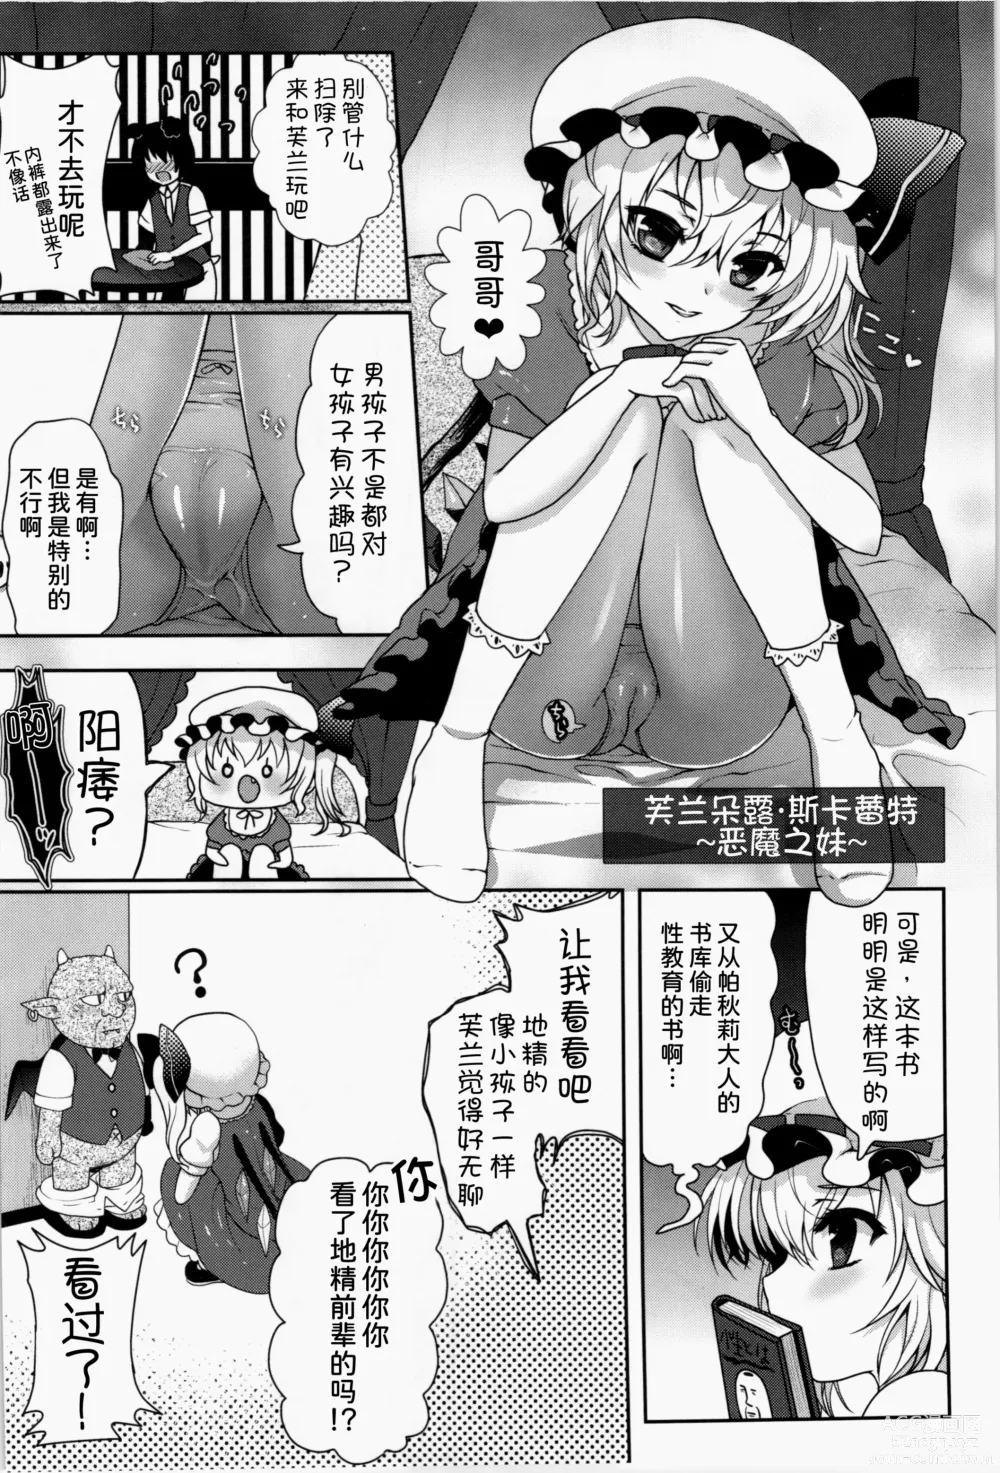 Page 6 of doujinshi concern